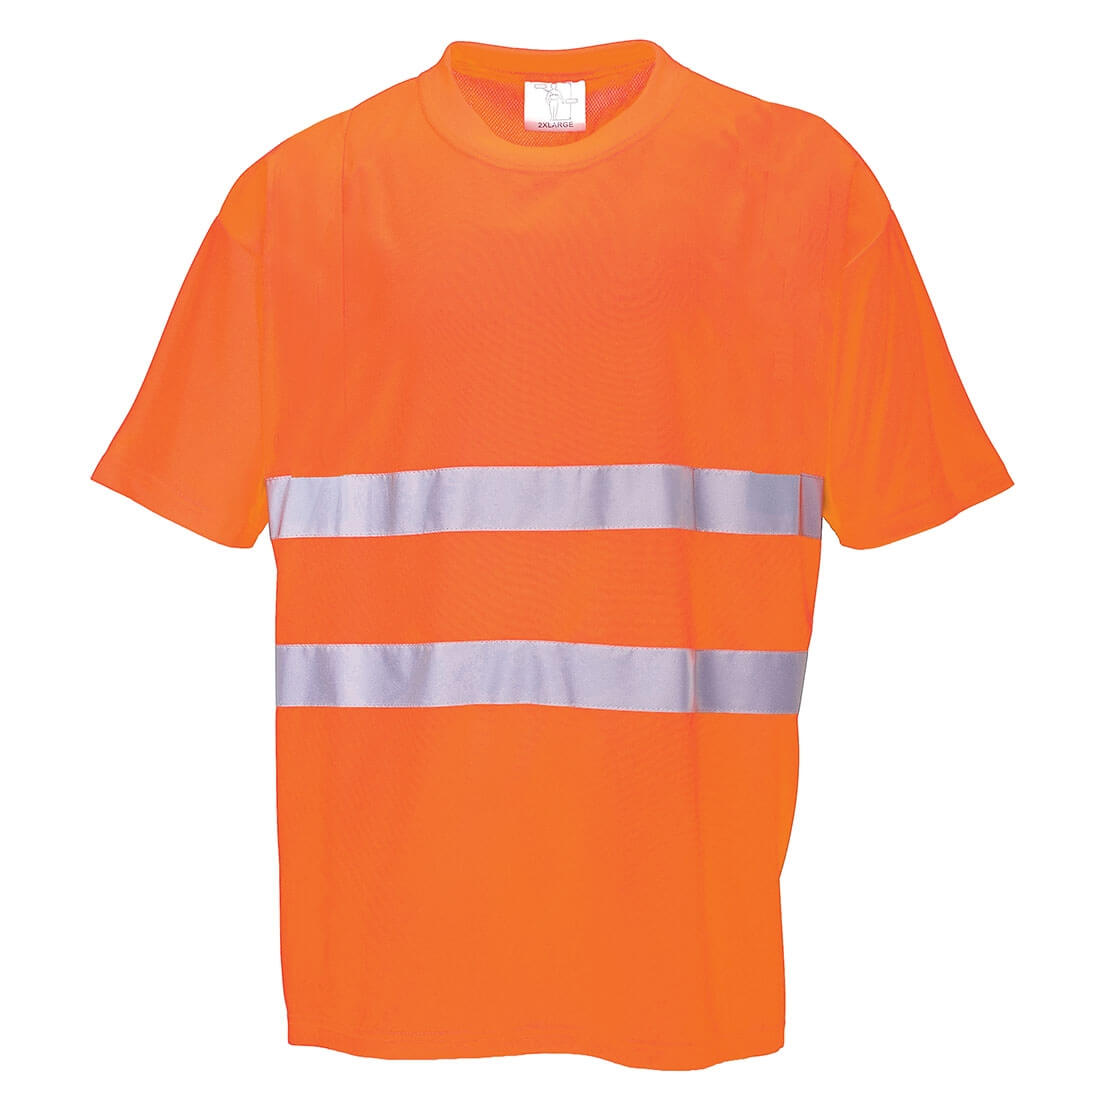 Comfort T-shirt - Safetywear